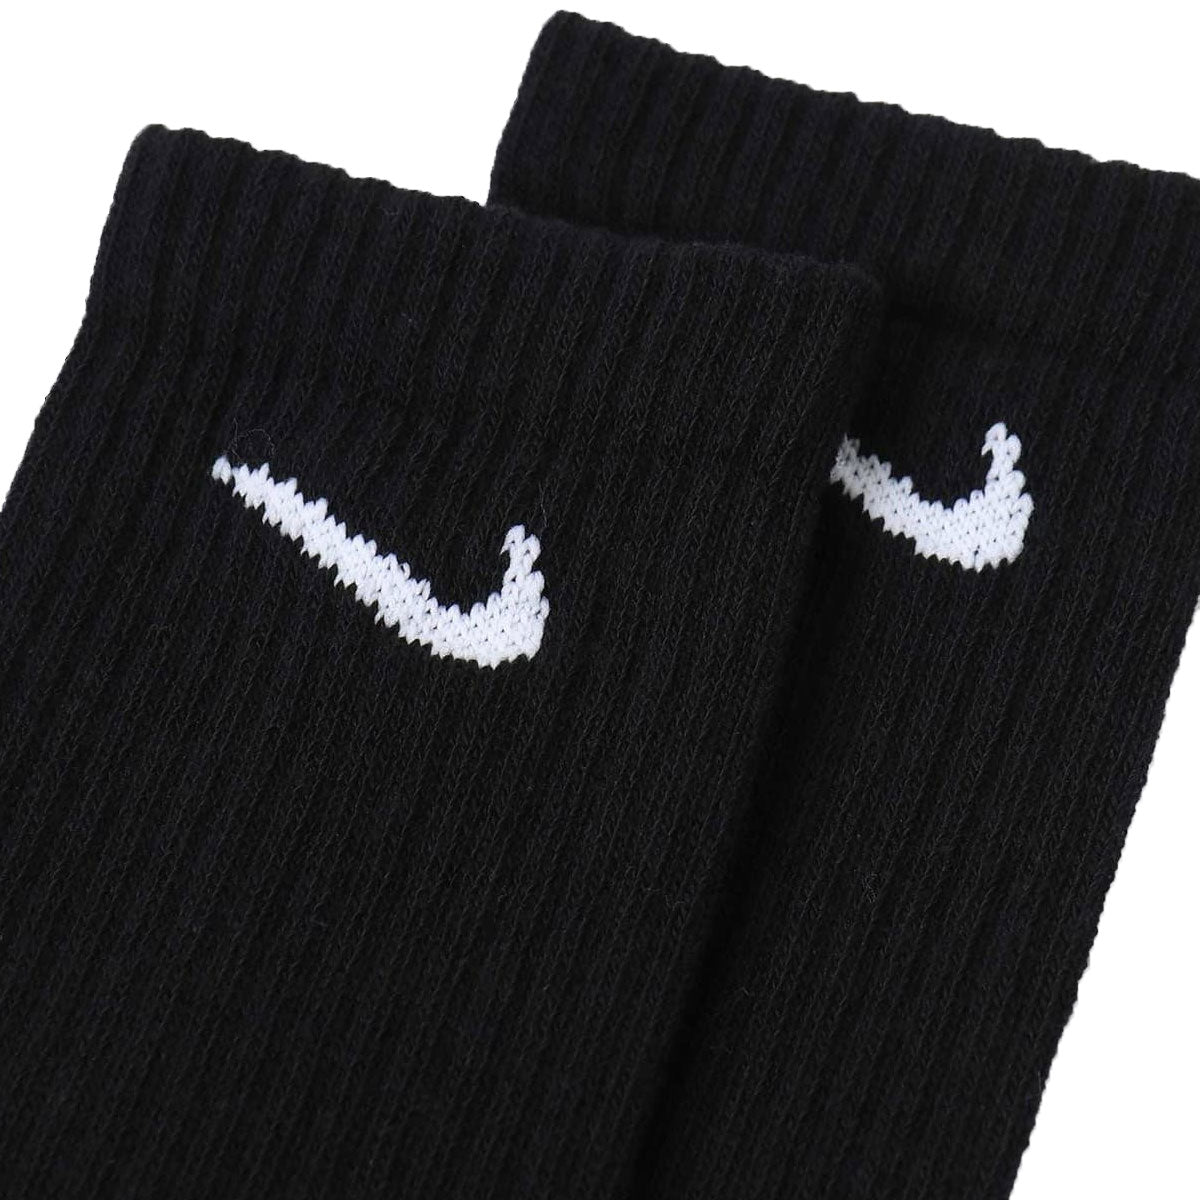 Nike Men's Everyday Plus Cushioned Training Crew Socks Black - 3 Pack - KickzStore